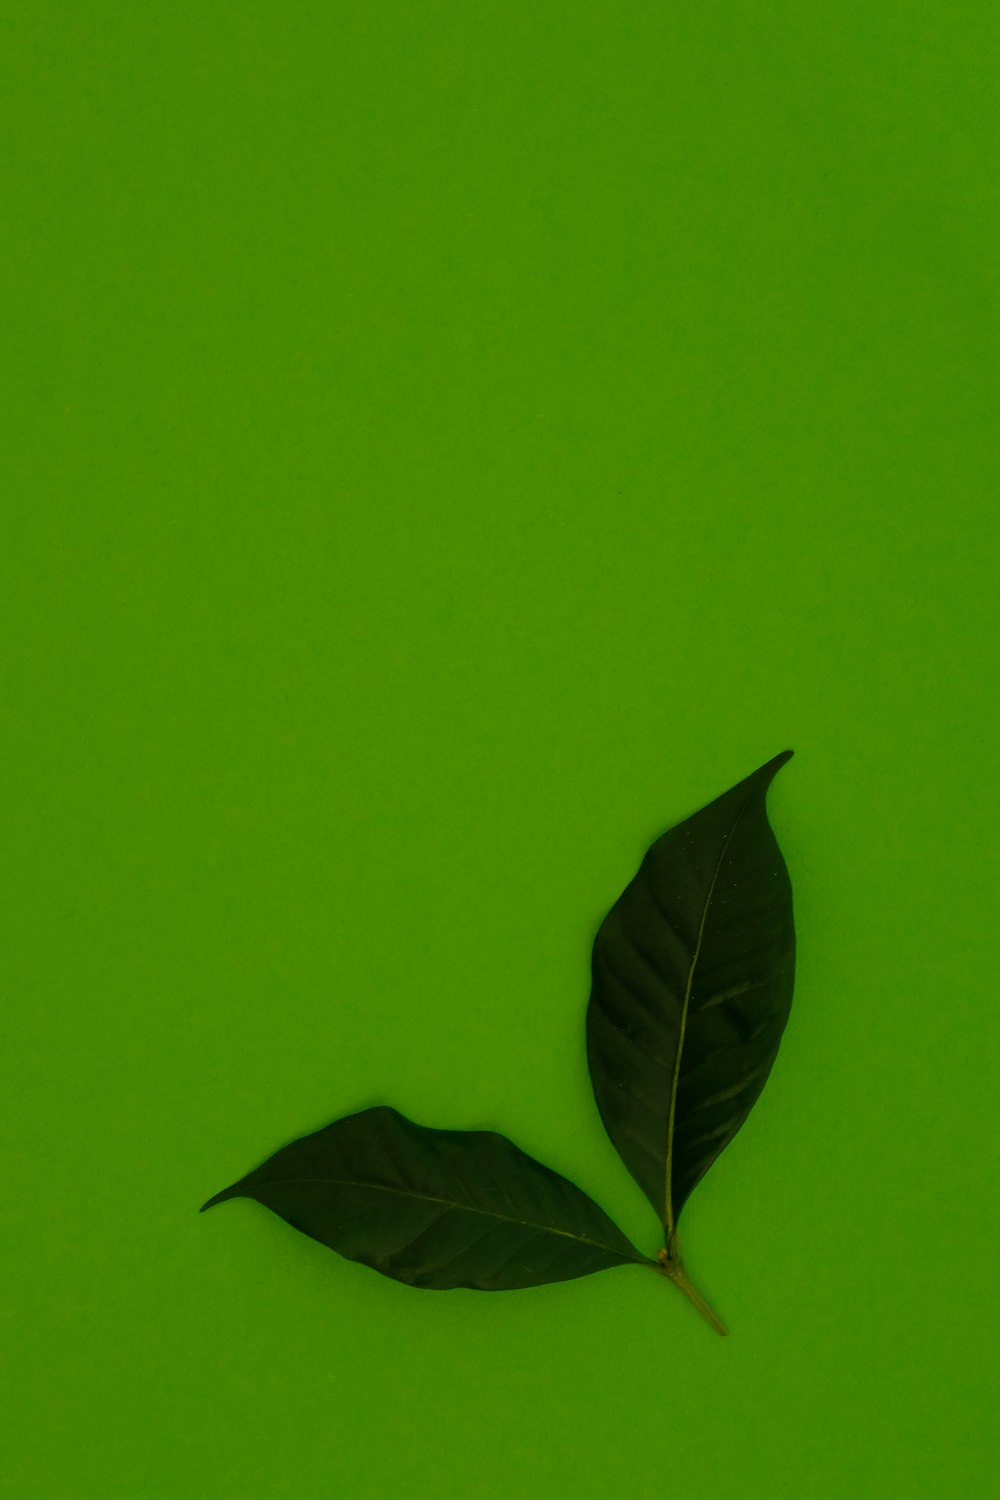 foglia verde su sfondo verde